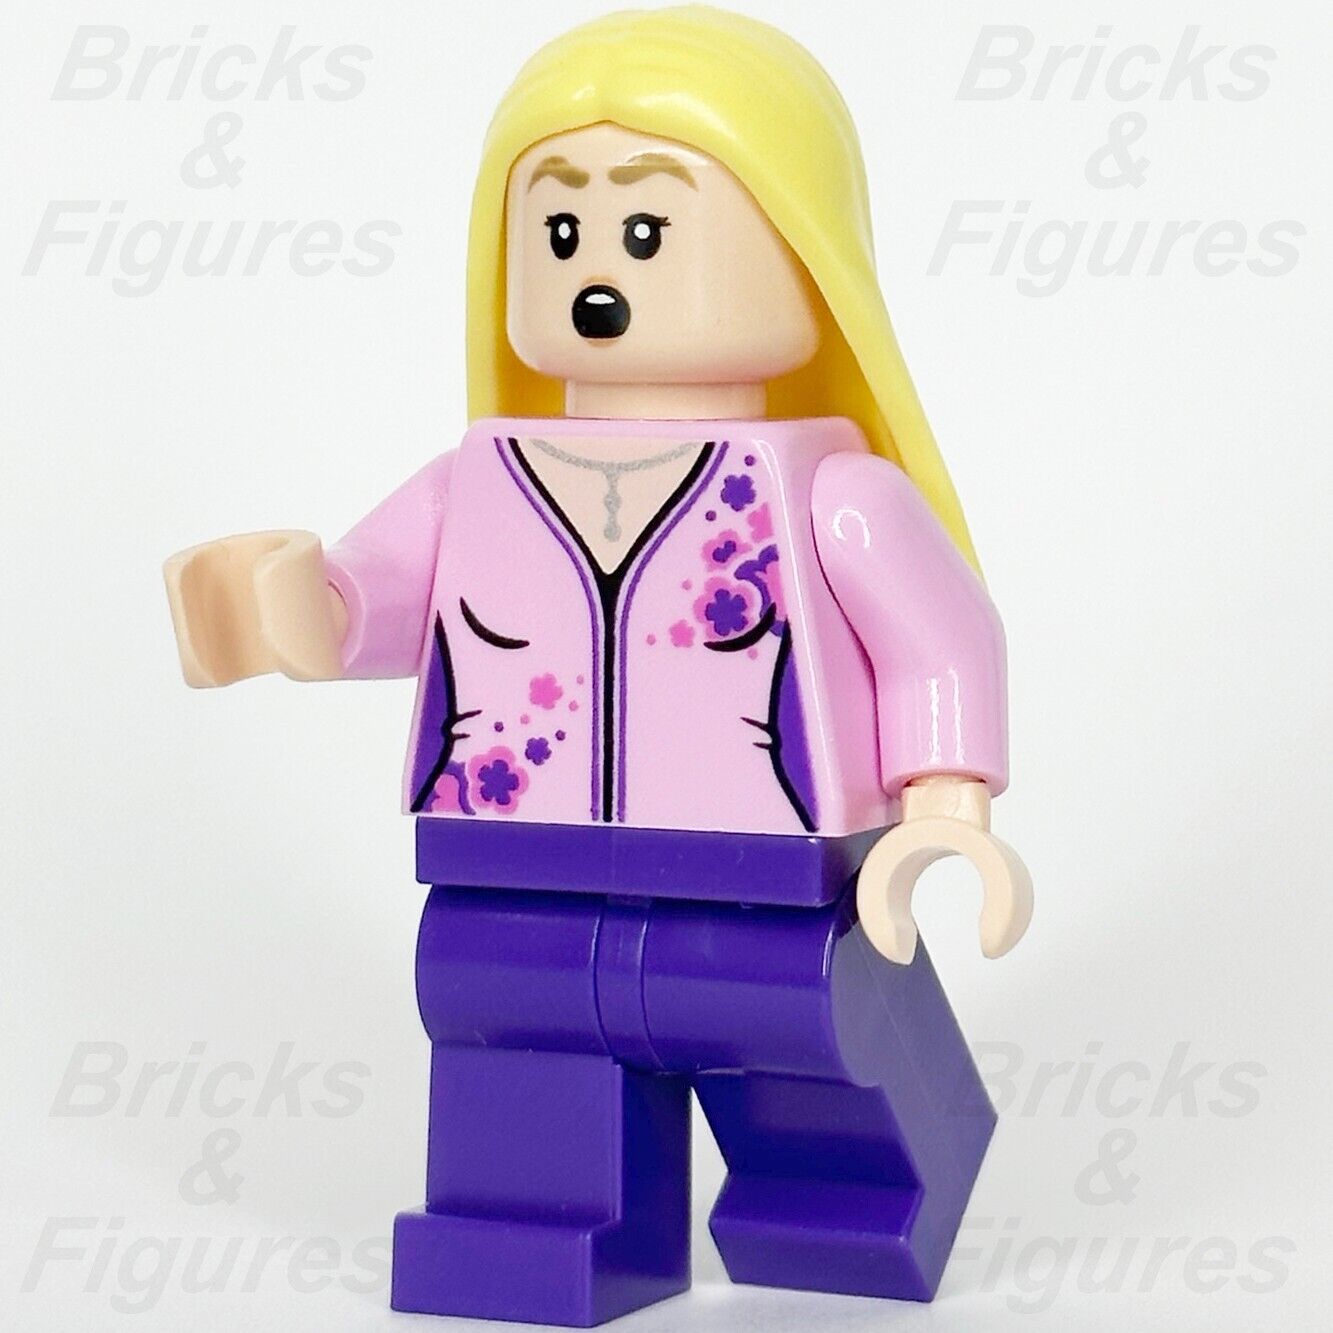 LEGO Creator Phoebe Buffay Minifigure F·R·I·E·N·D·S Friends TV Series 10292 2